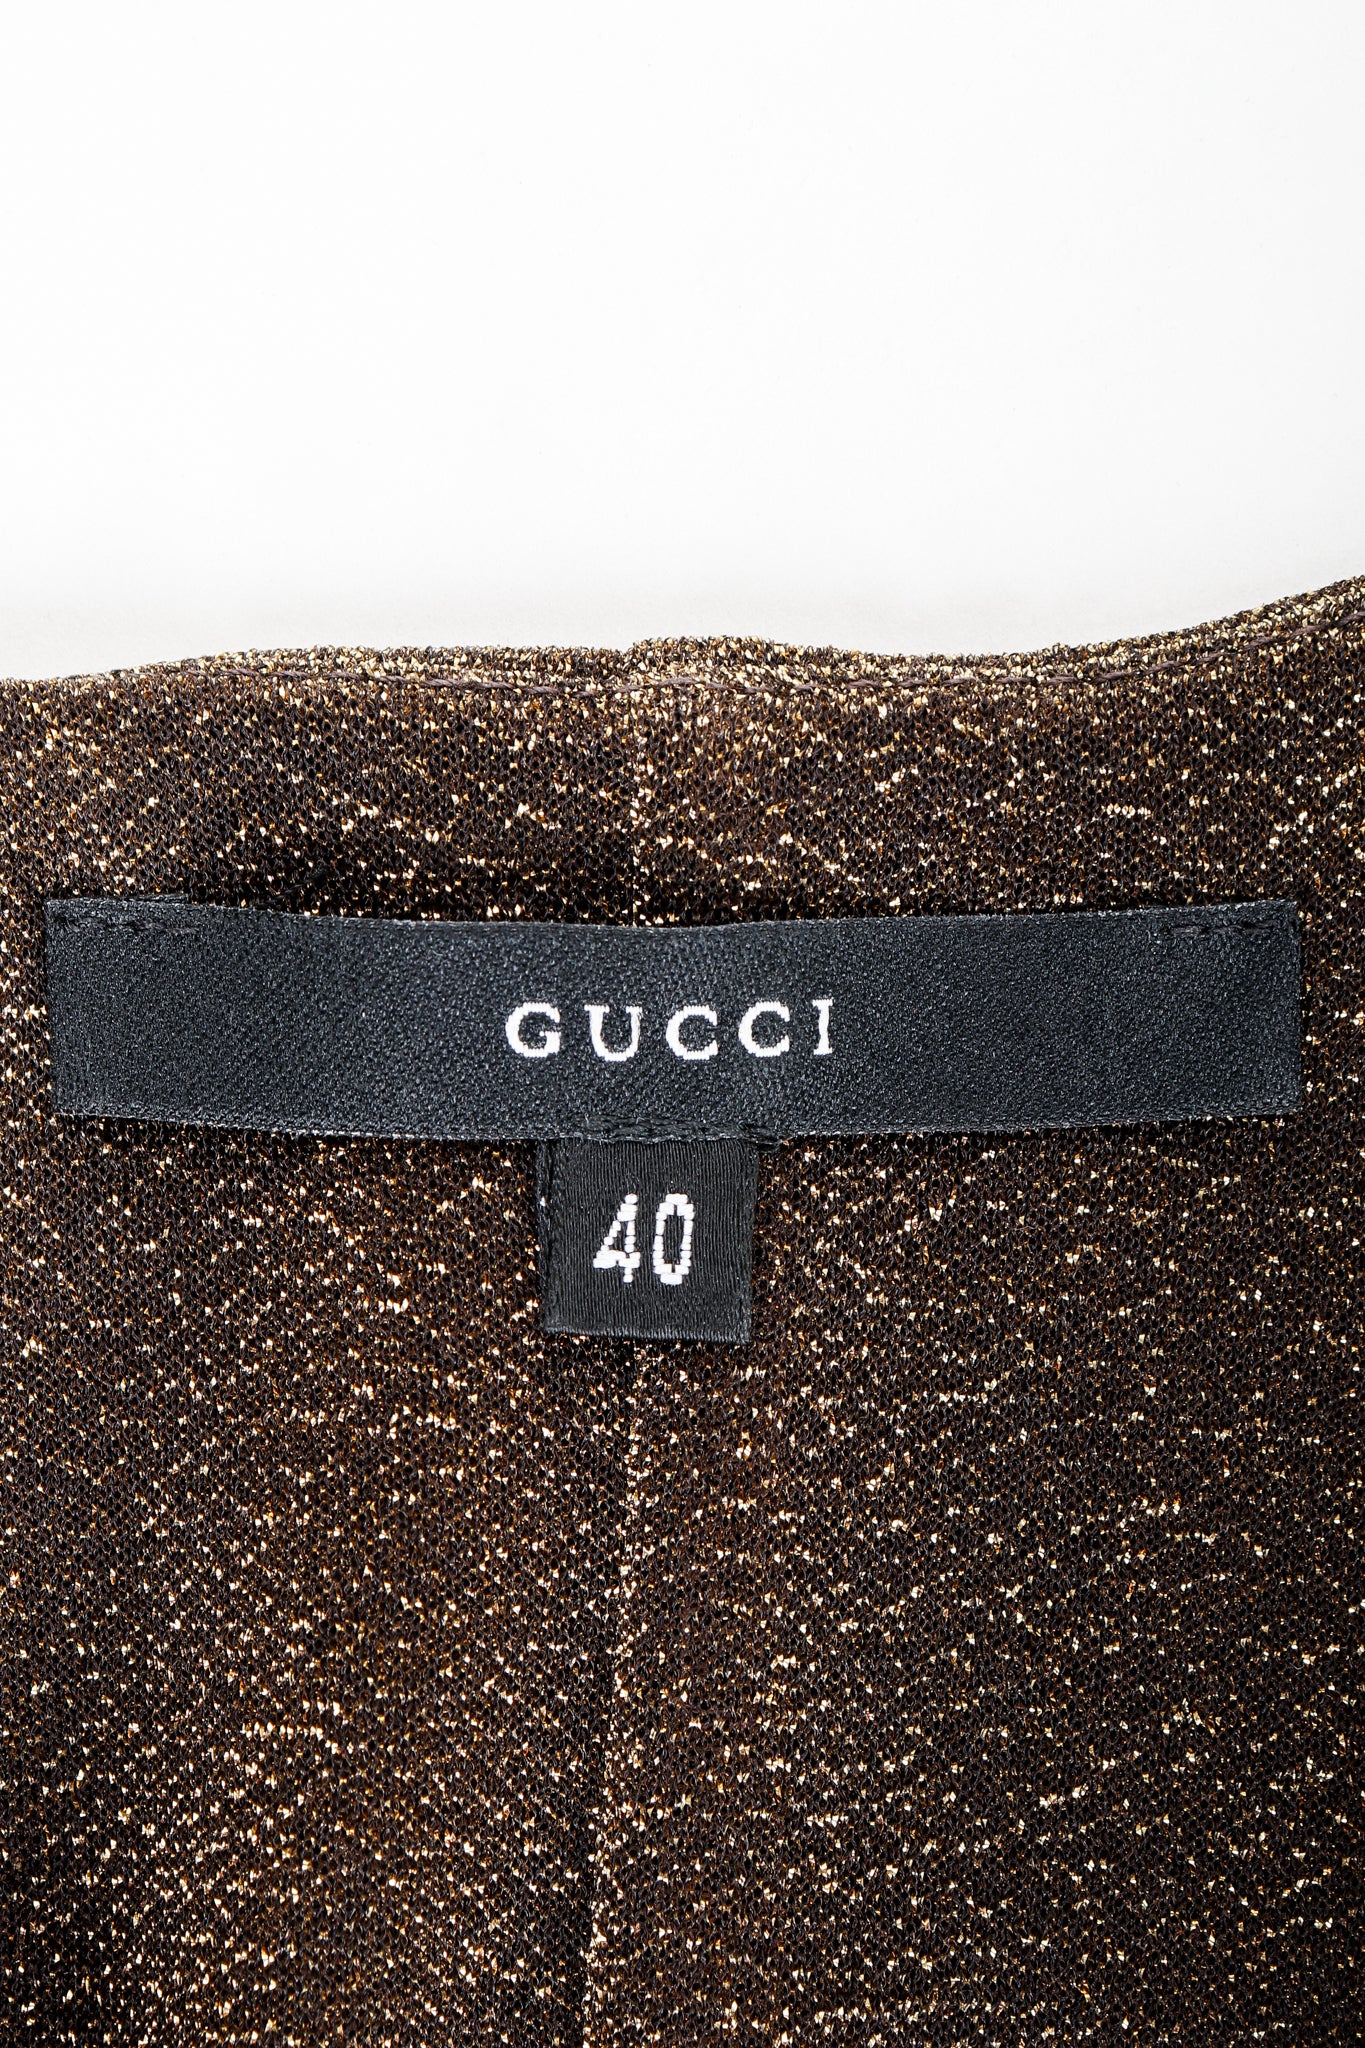 Vintage Gucci Gold Lamé Dionysus Plunge Dress label on fabric Recess Los Angeles